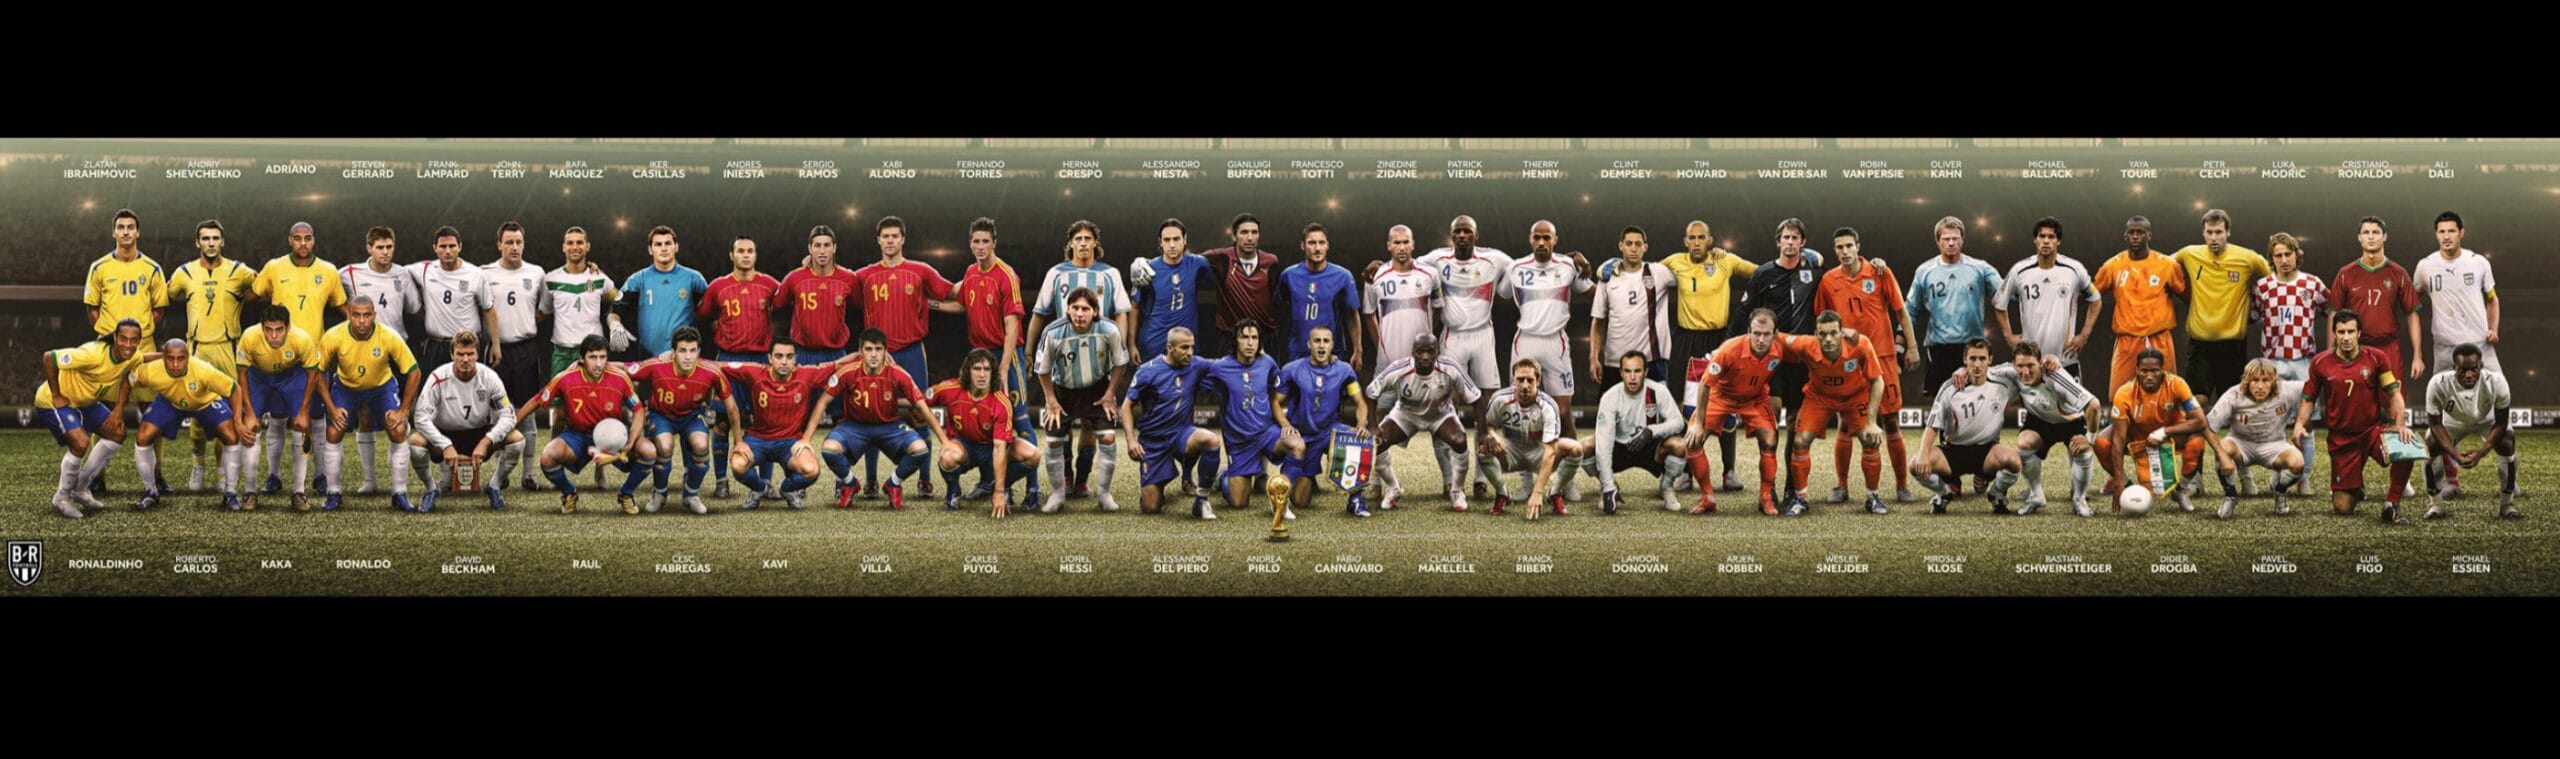 Wallpaper Football Players